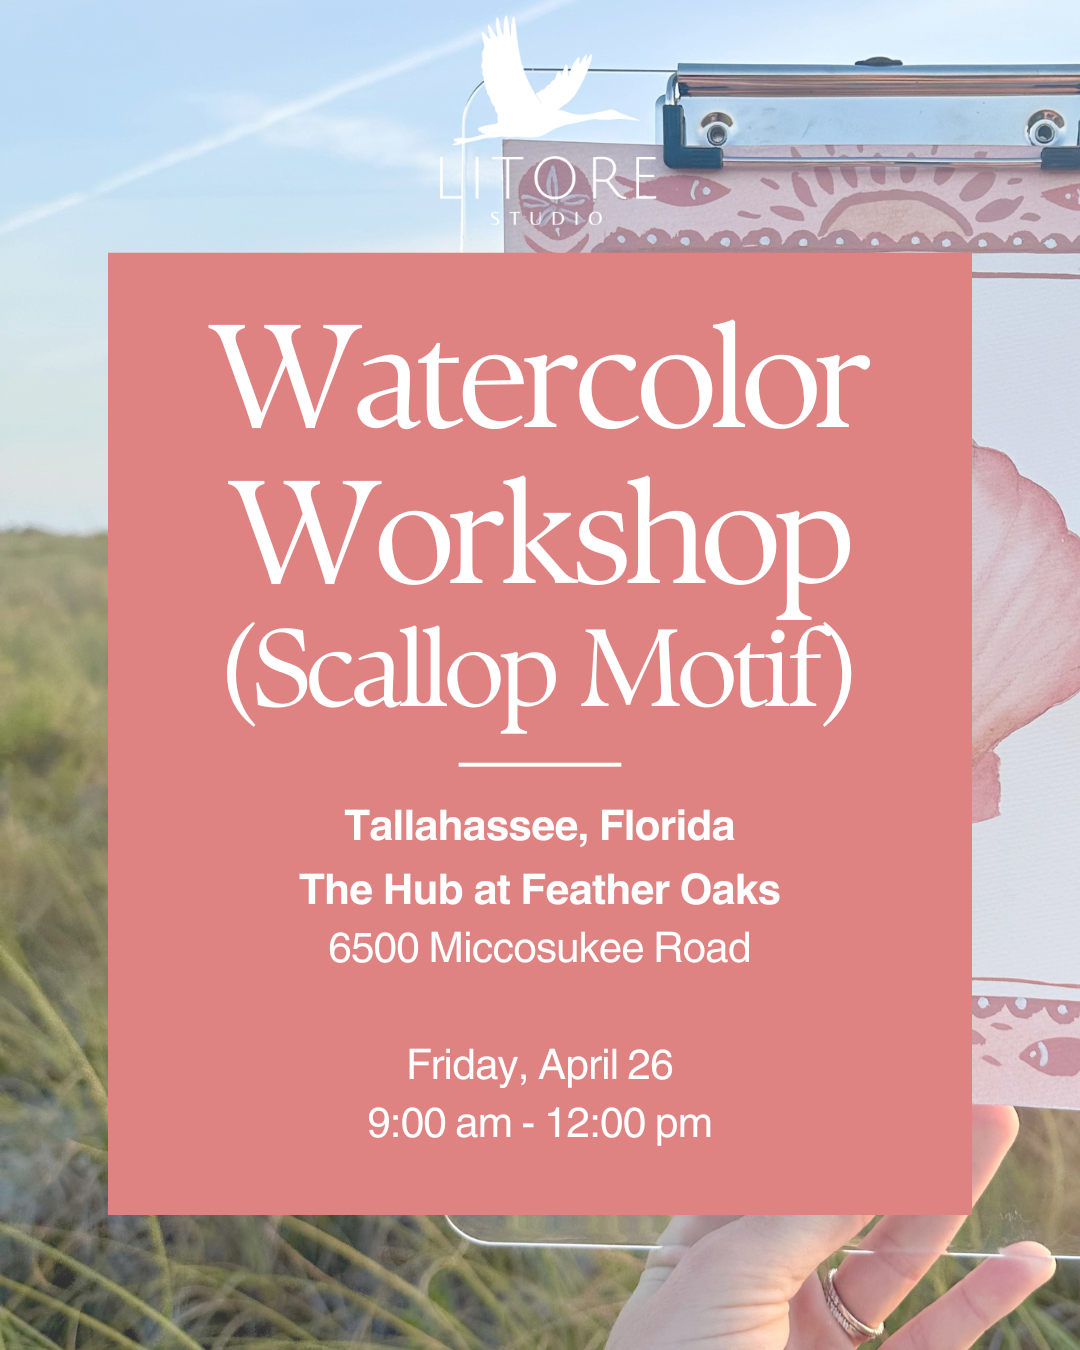 Watercolor Workshop at The Hub (Scallop Motif)